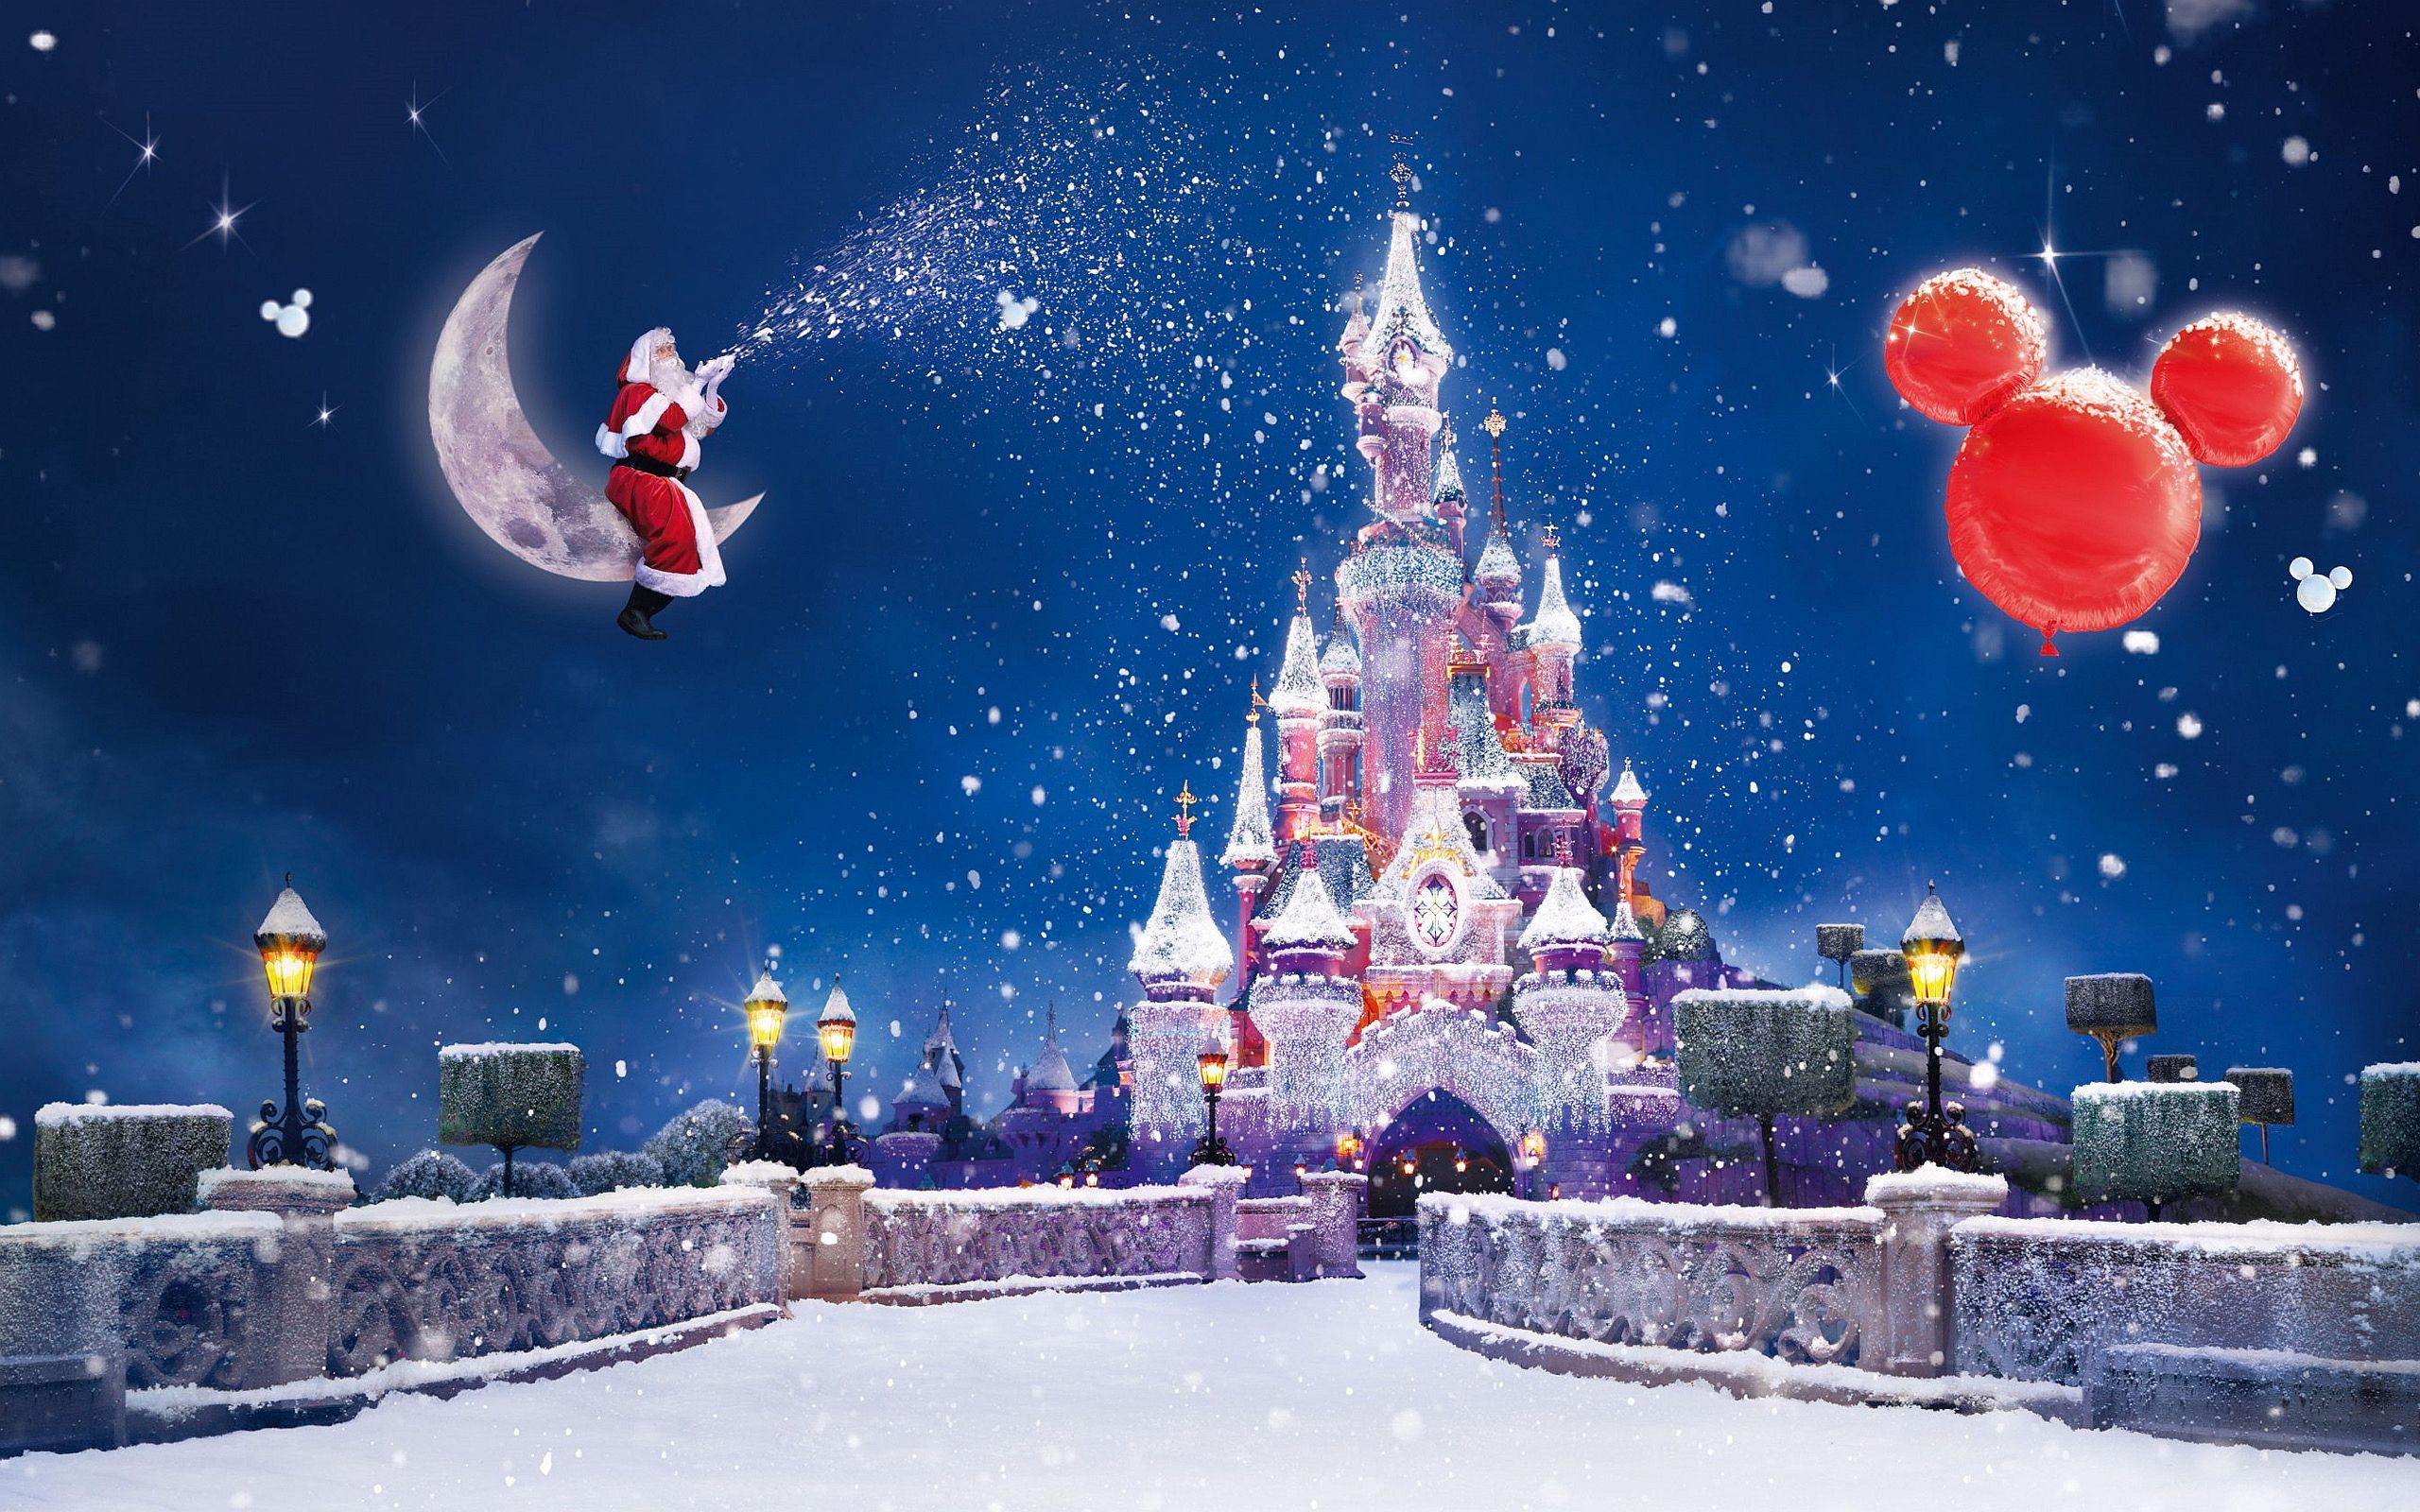 Happy Christmas And New Year Santa Claus In Disney Full HD Wallpaper 2560x1600, Wallpaper13.com